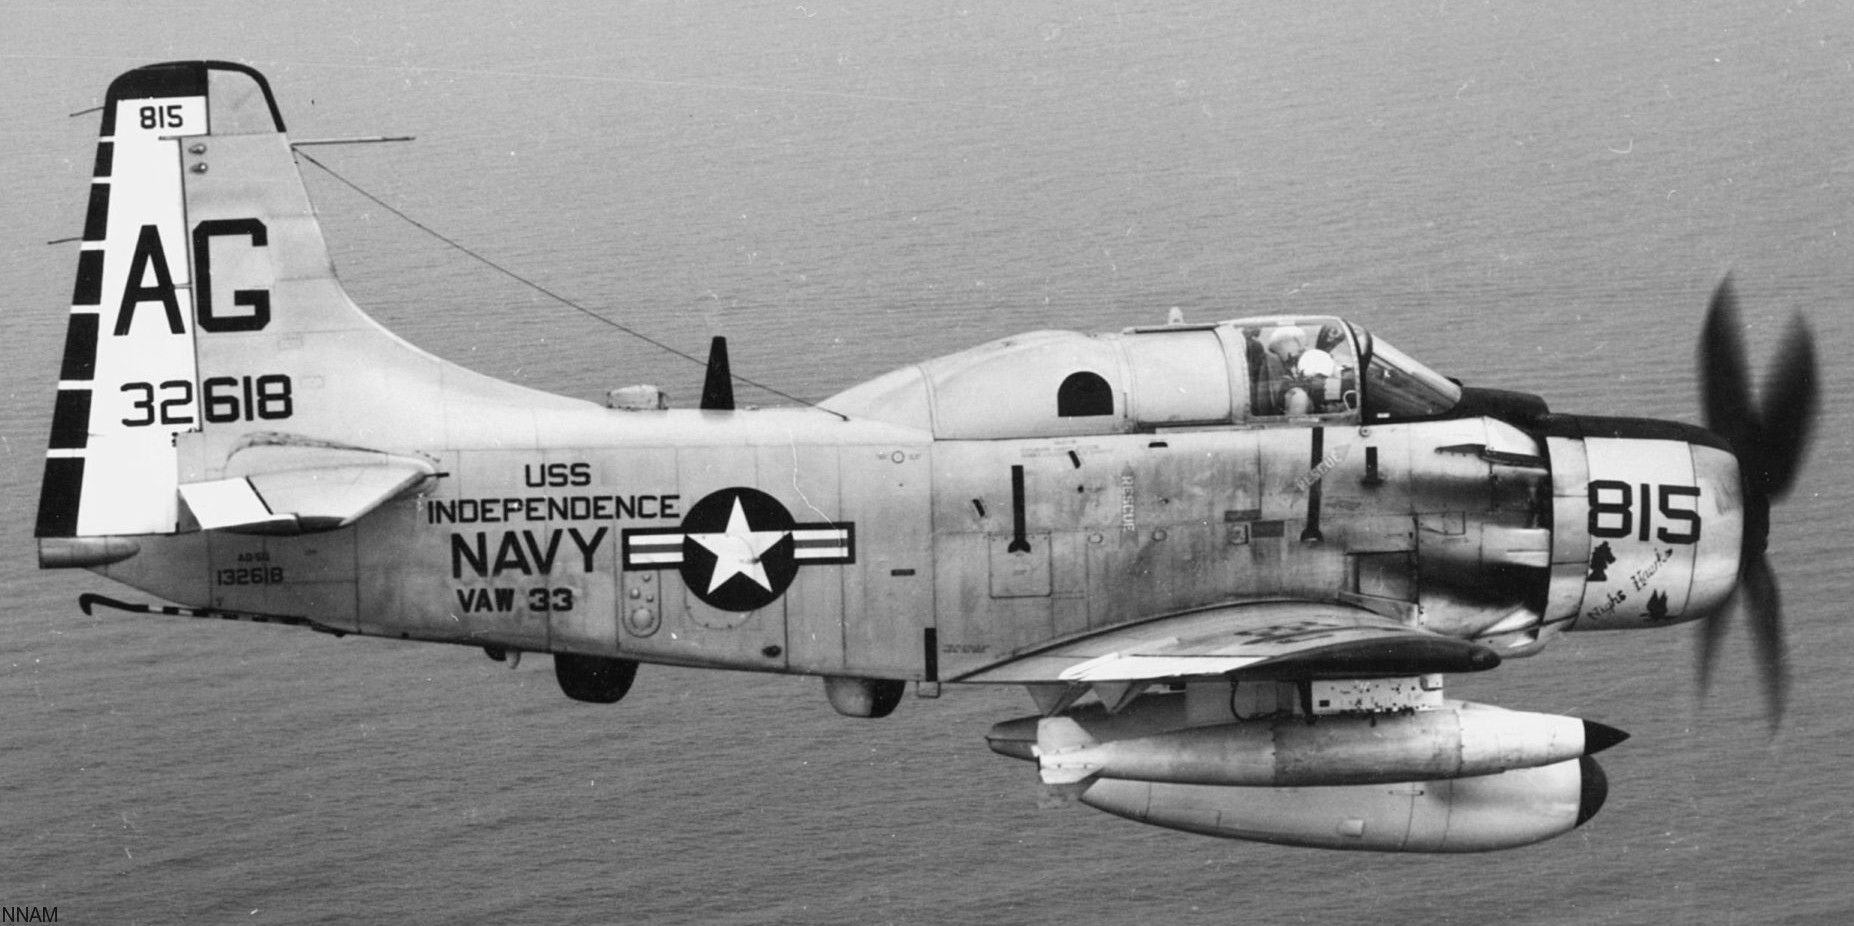 vaw-33 nighthawks carrier airborne early warning squadron caraewron us navy douglas ea-1 ad-5 skyraider uss cvw 02x